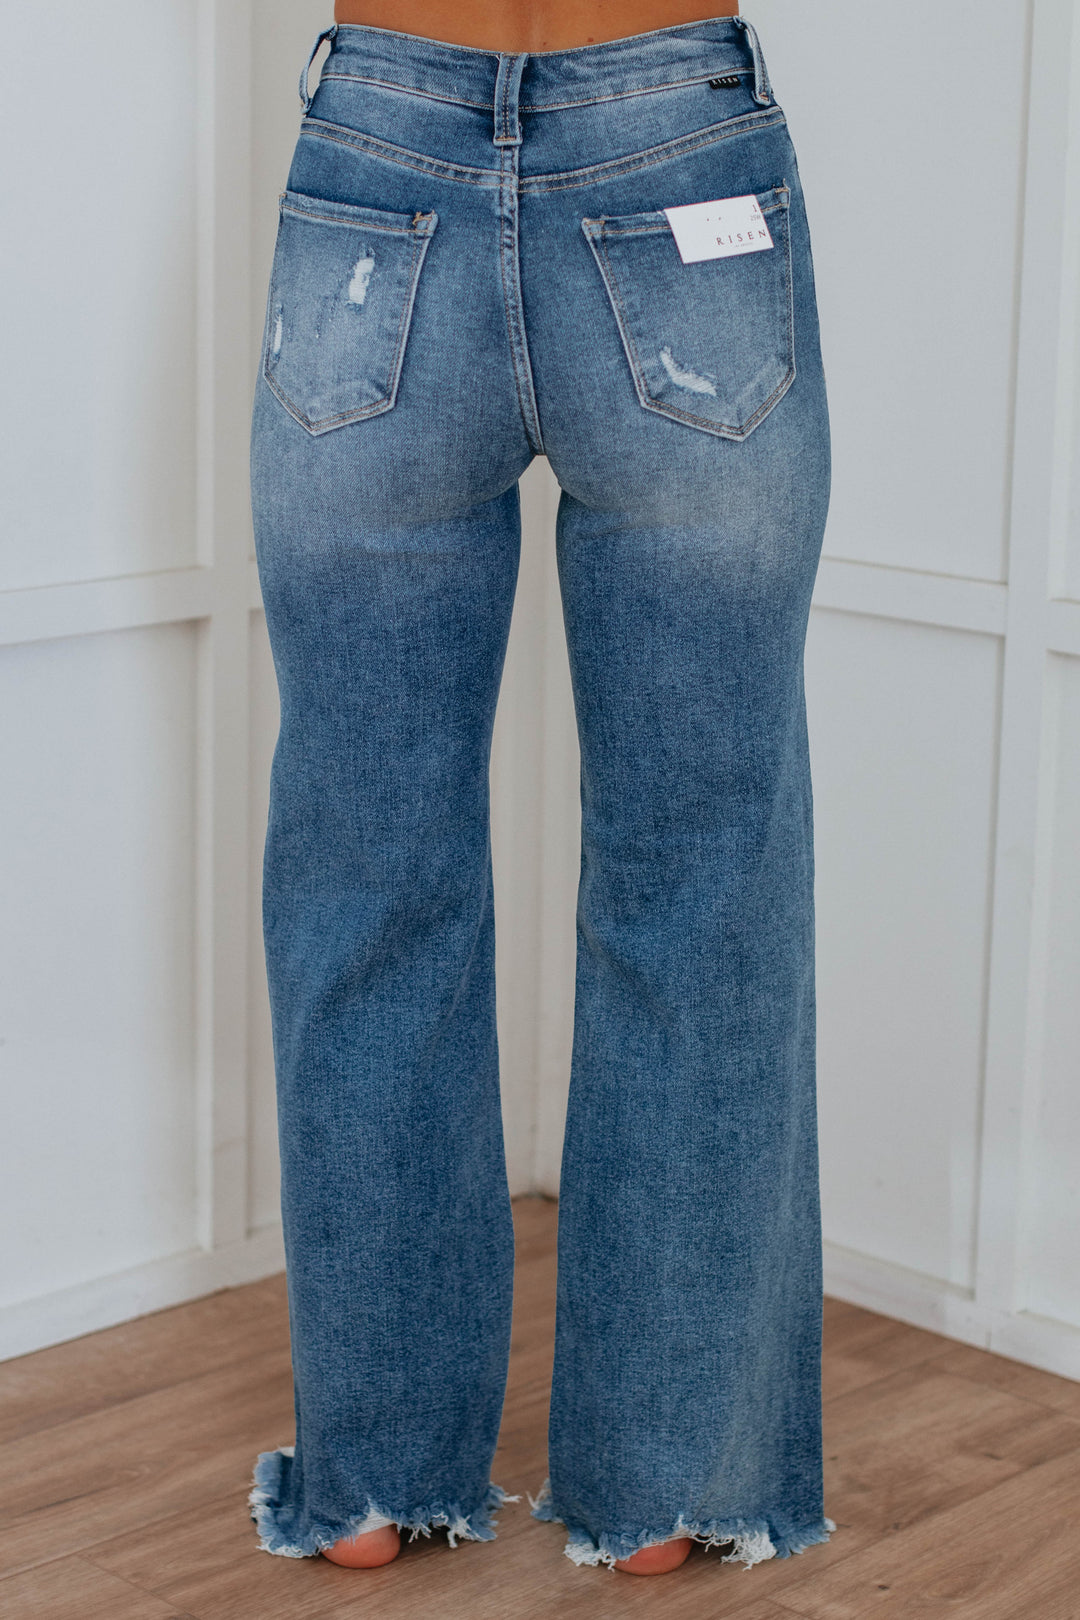 Lily Risen Jeans